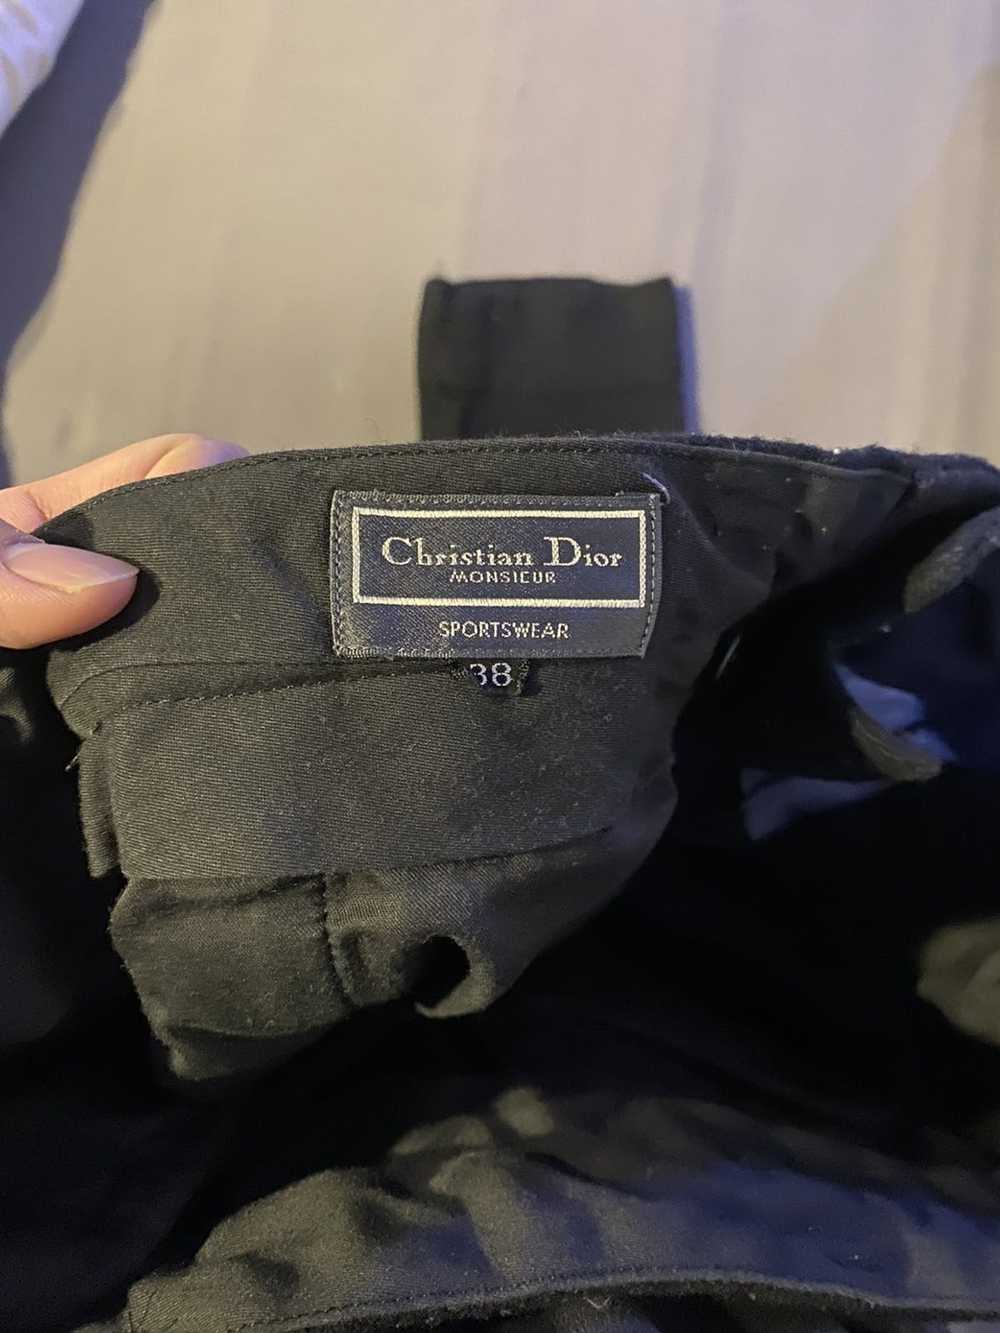 Christian Dior Monsieur Tailored pants dior sport… - image 2